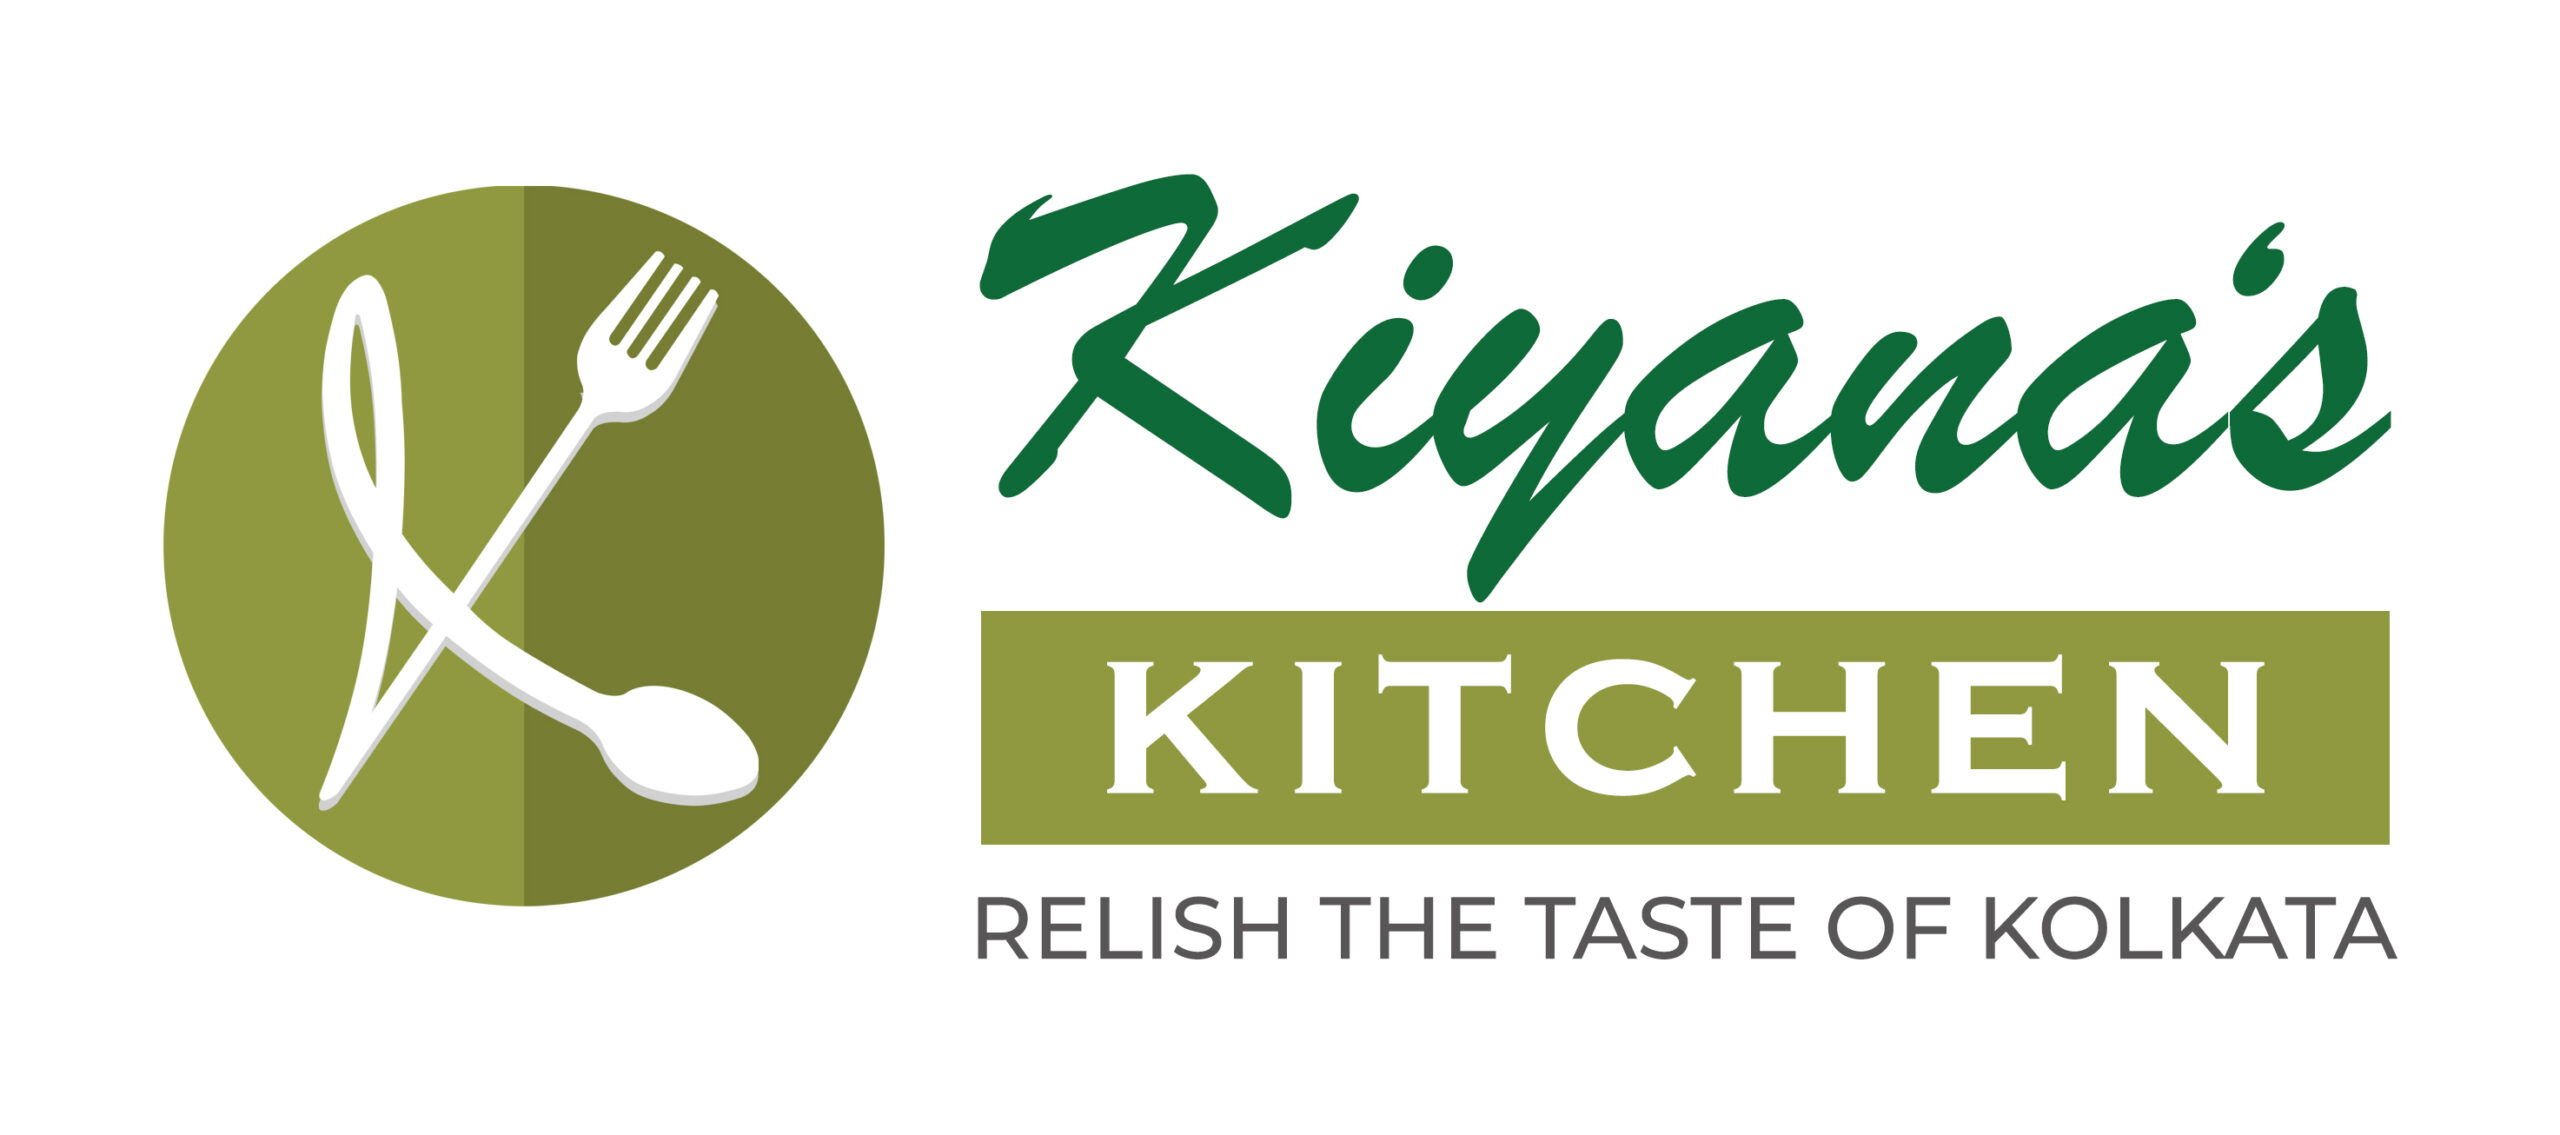 Authentic Bengali Restaurant Near You | Kiyana's Kitchen